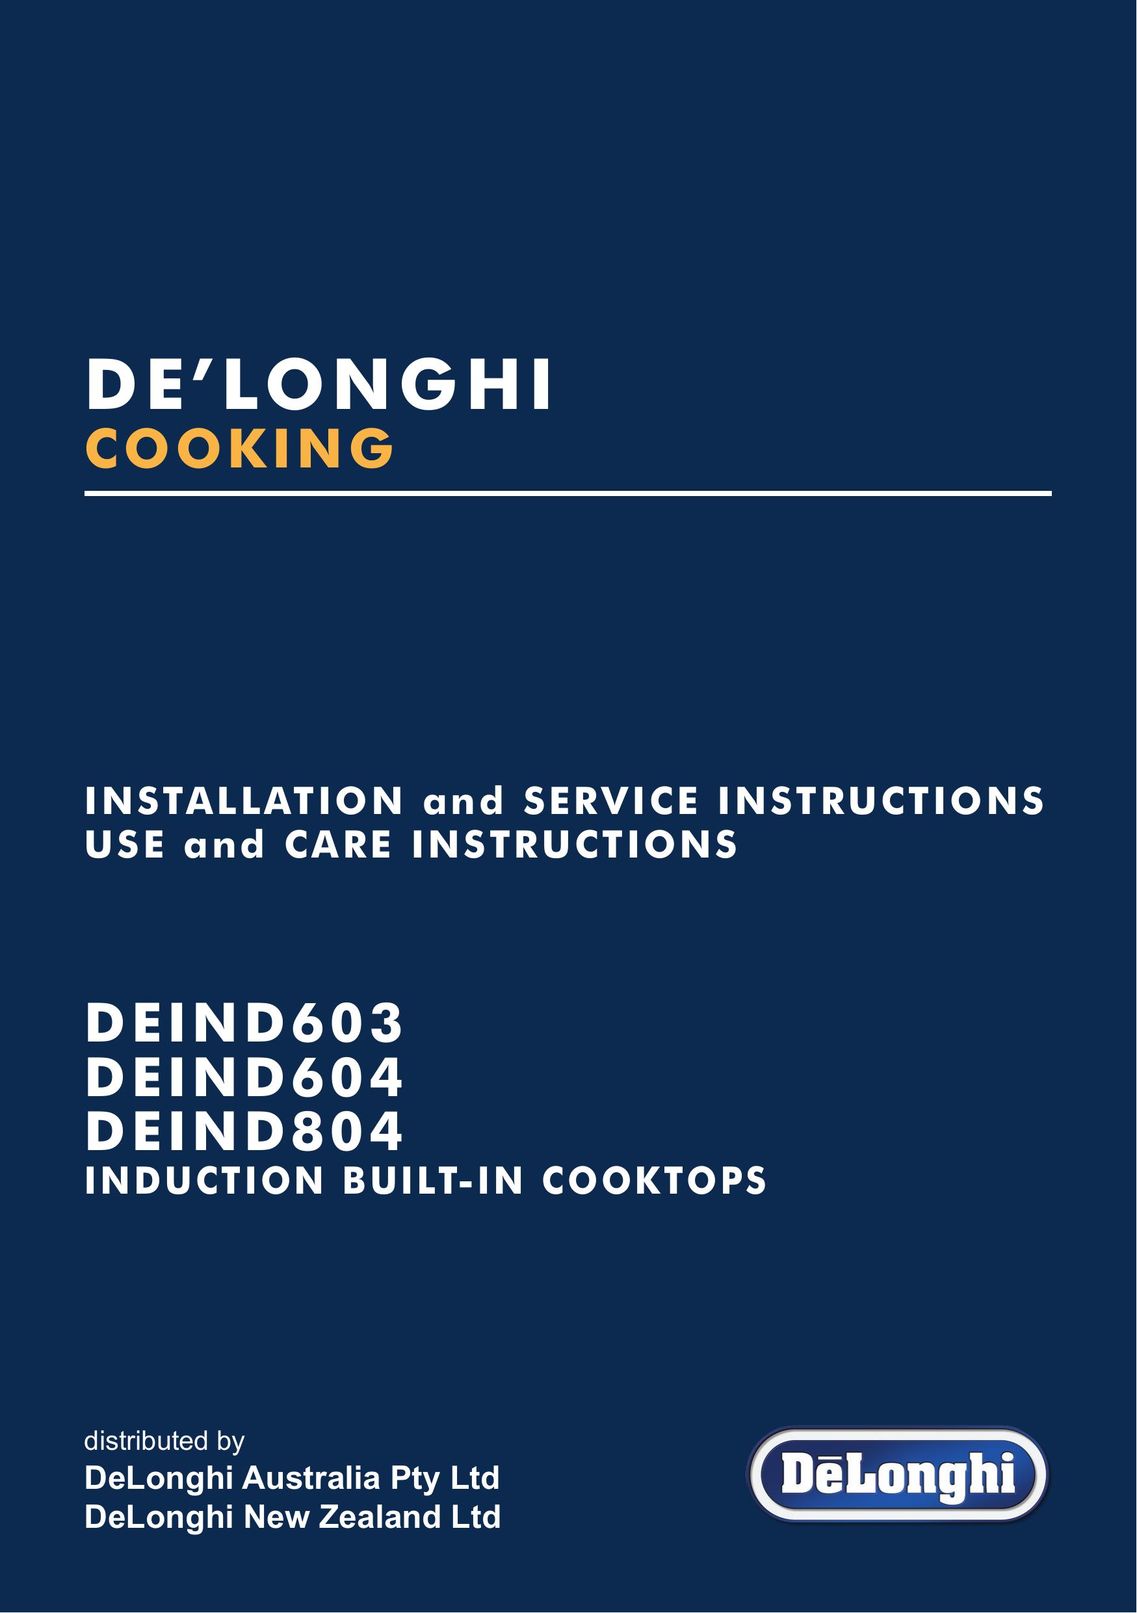 DeLonghi DEIND604 Cooktop User Manual